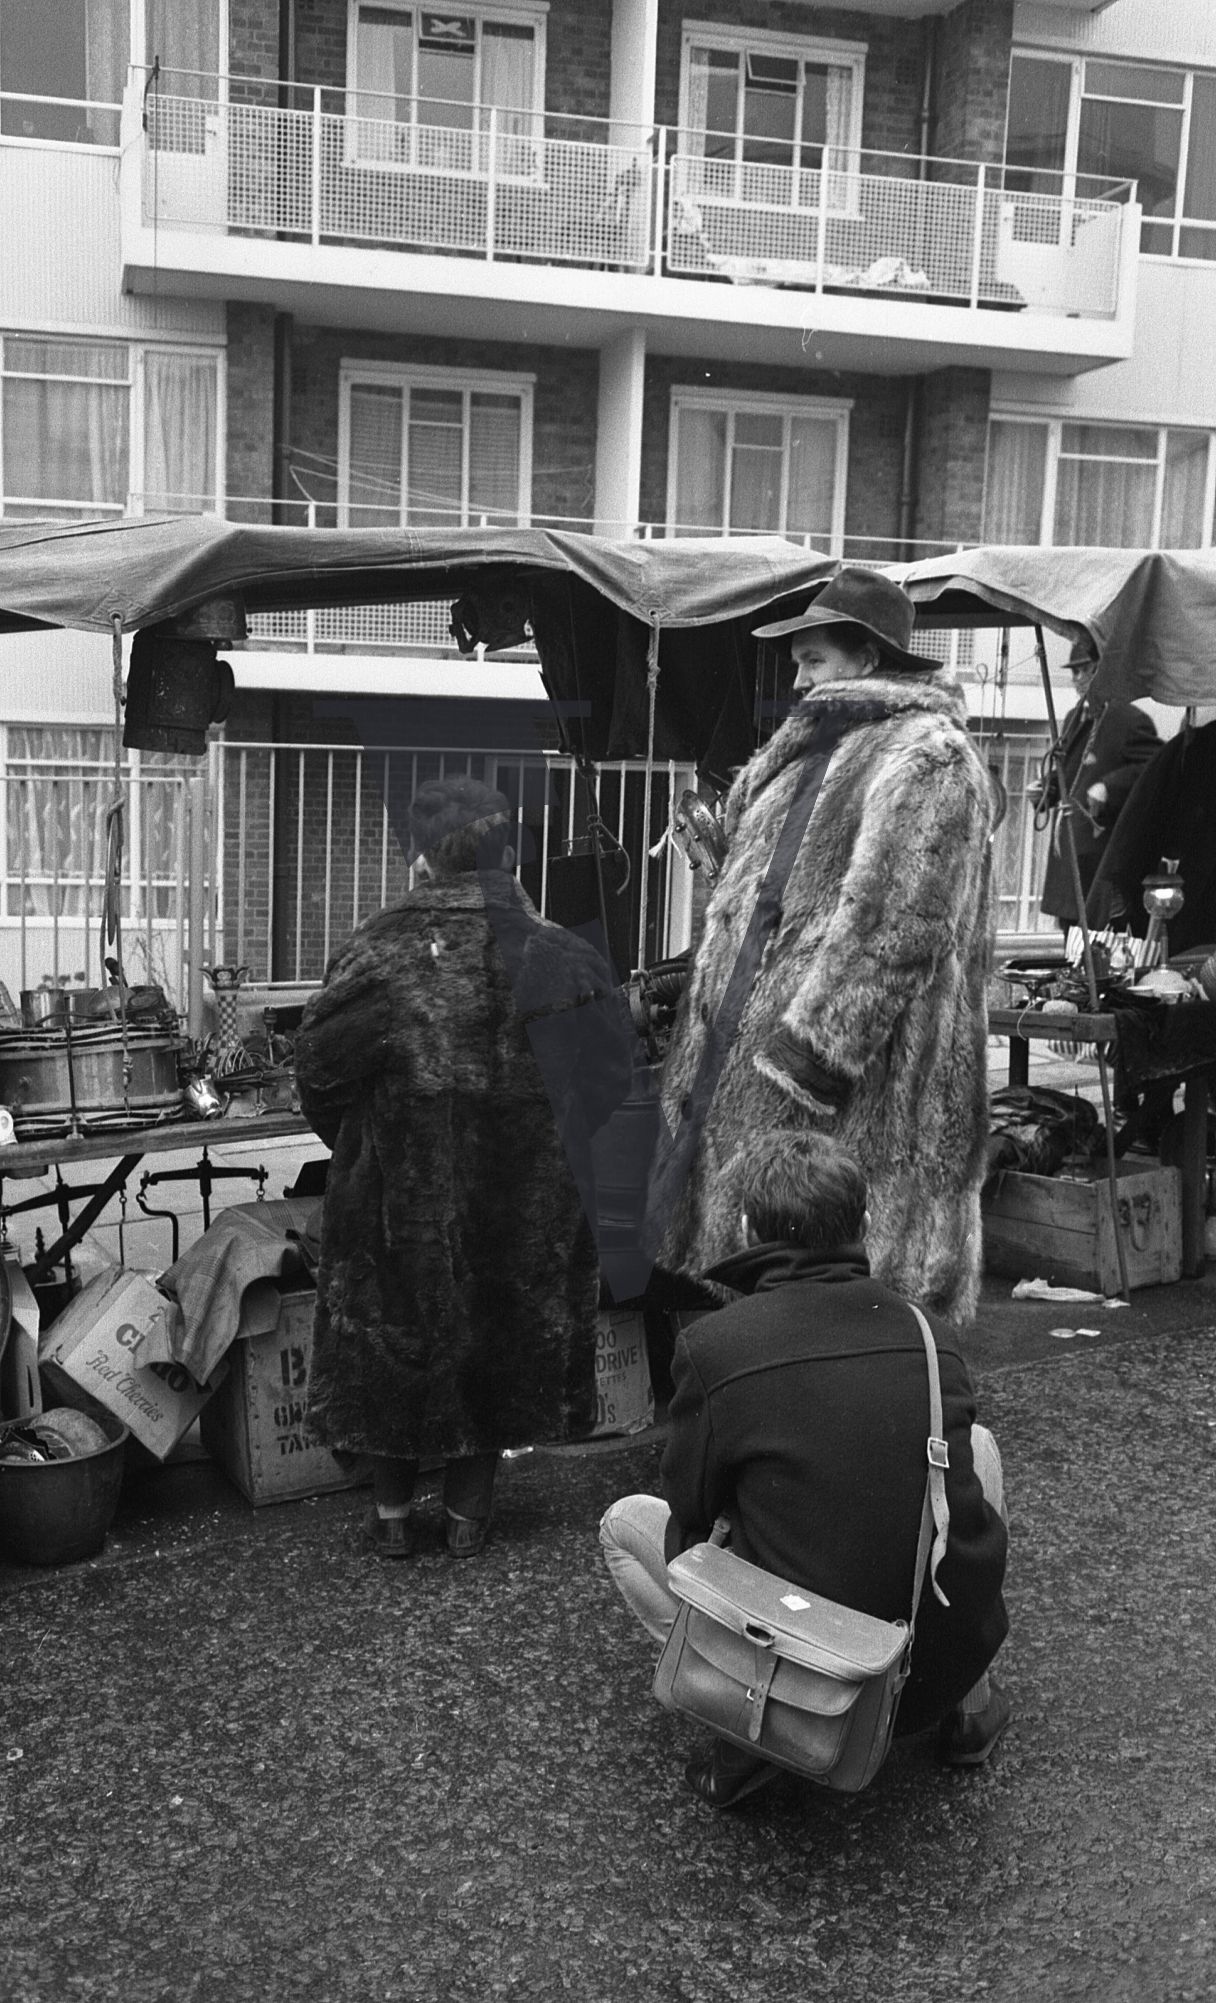 London, Sixties, street scenes, Portobello Road market, fur coat man and boy at stall.